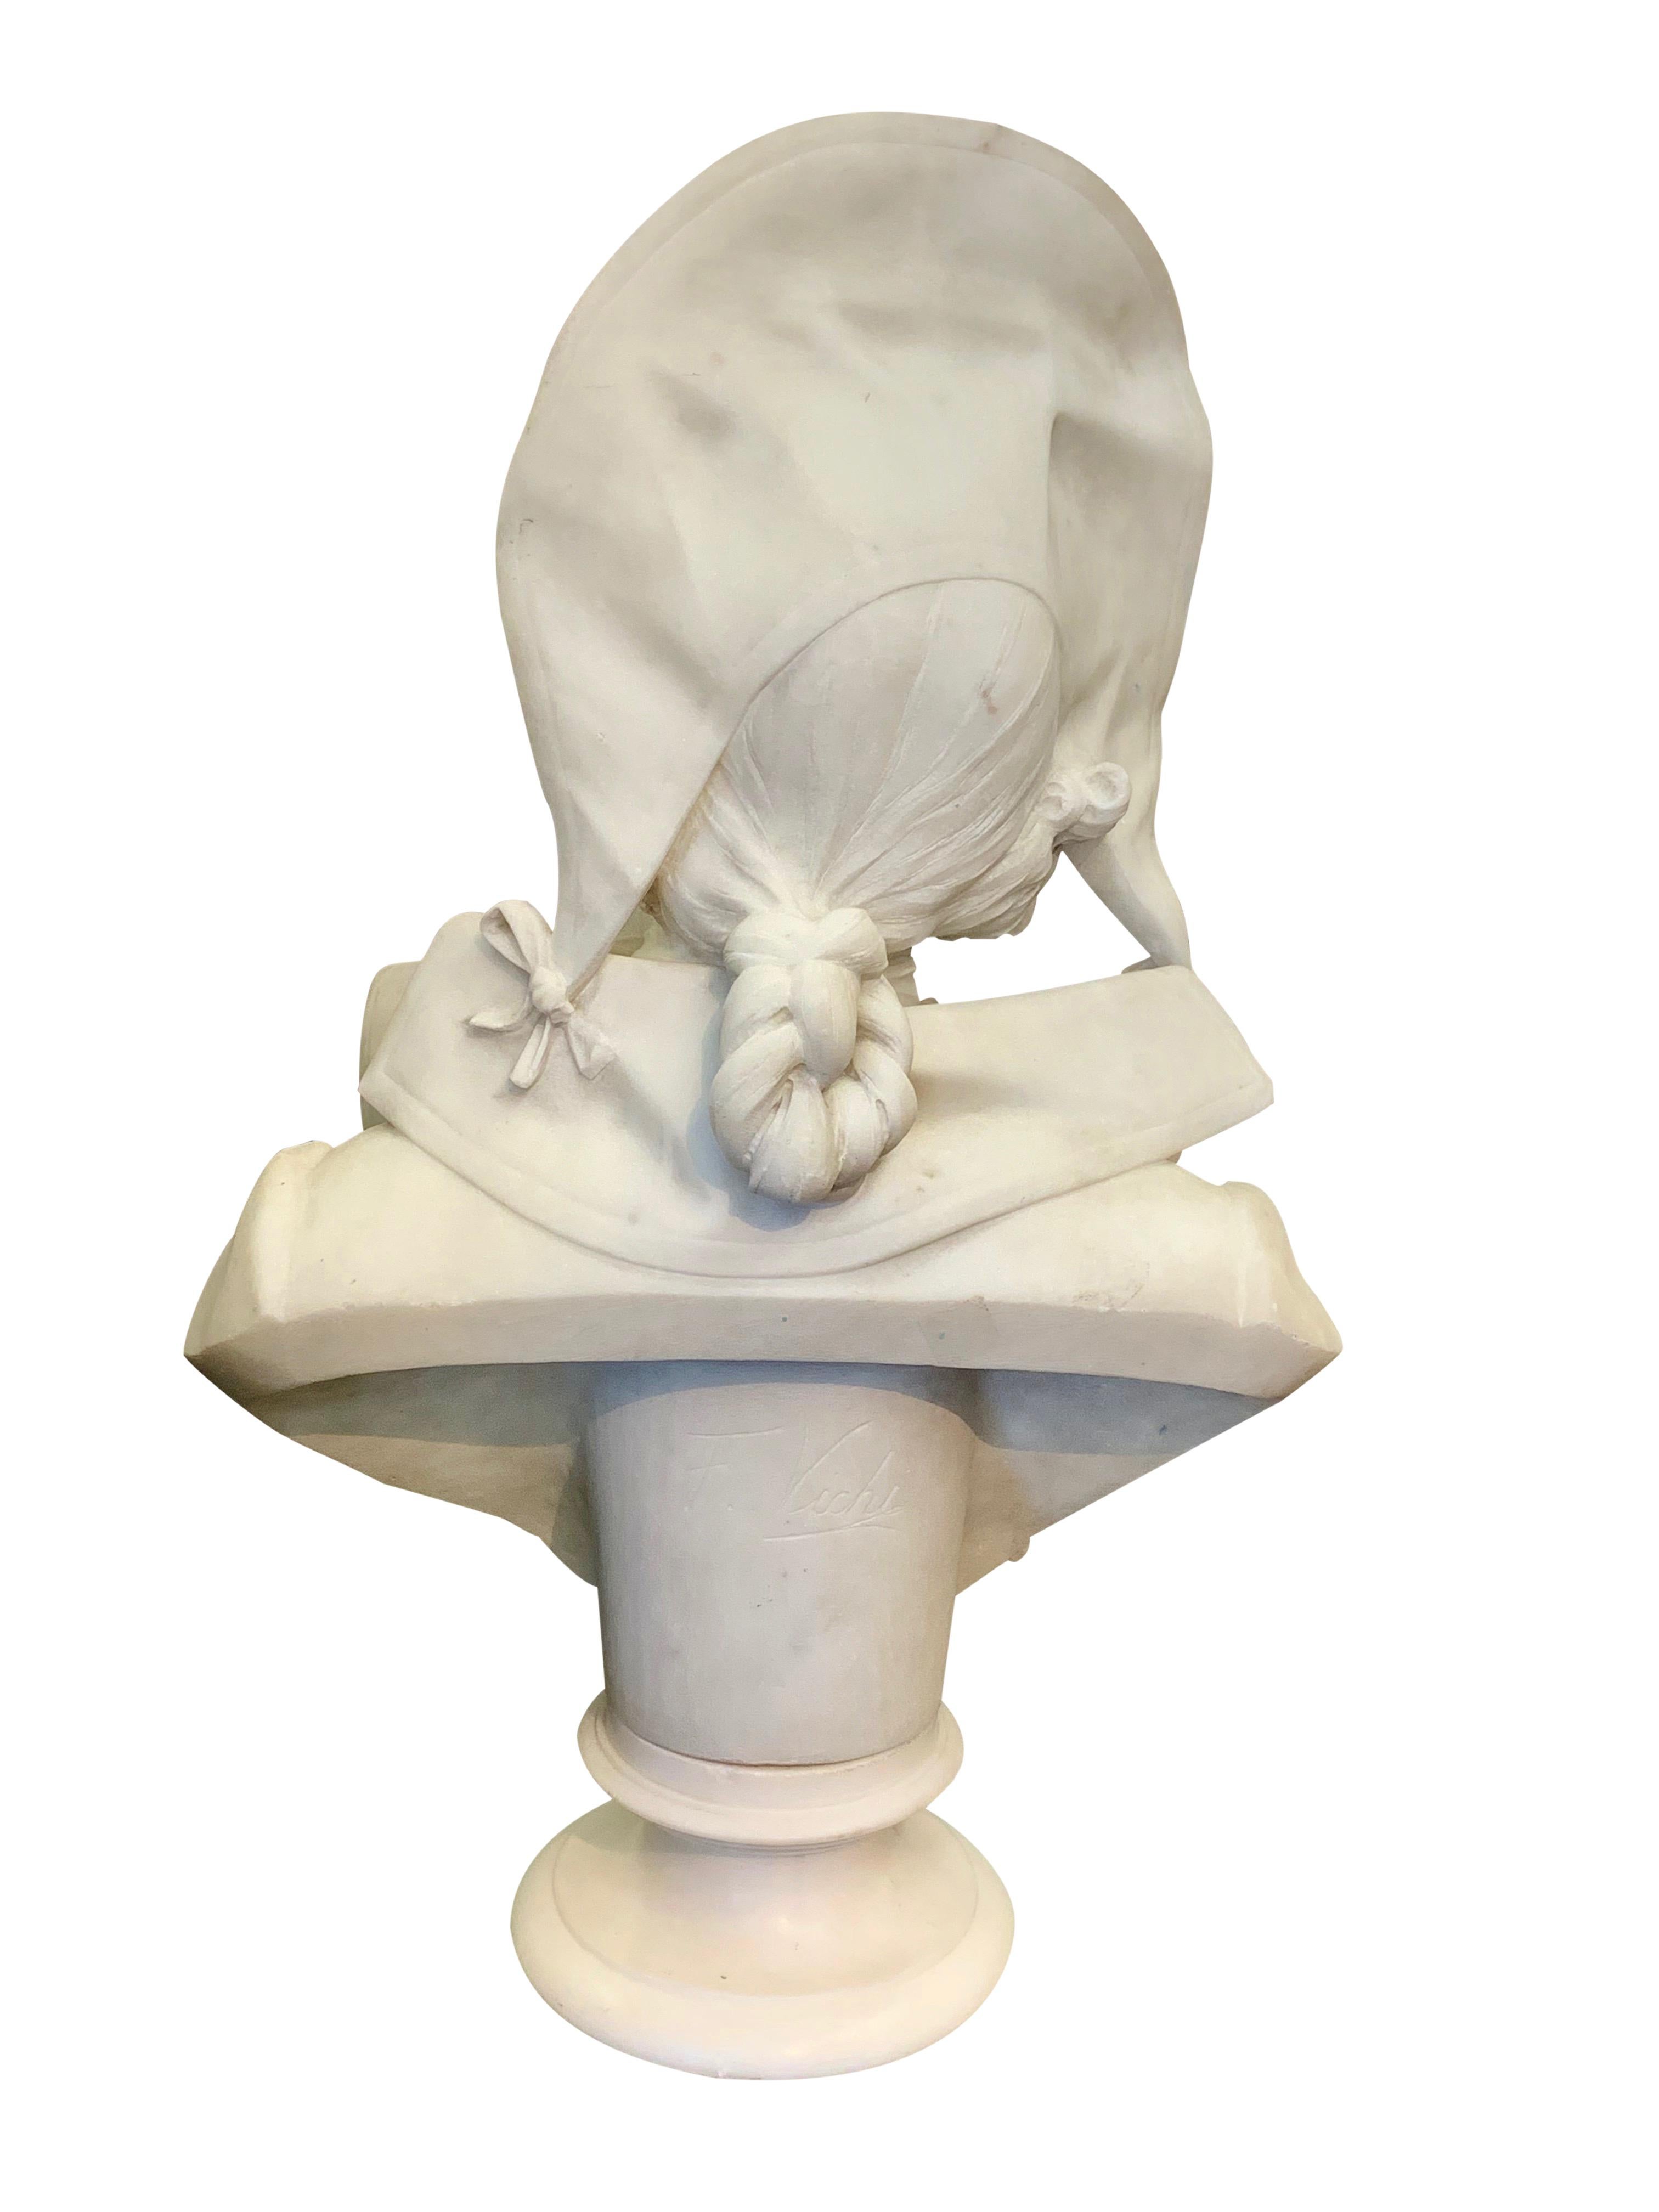 Antique Italian marble sculpture of a smiling lady by Ferdinando Vichi (Marmor)